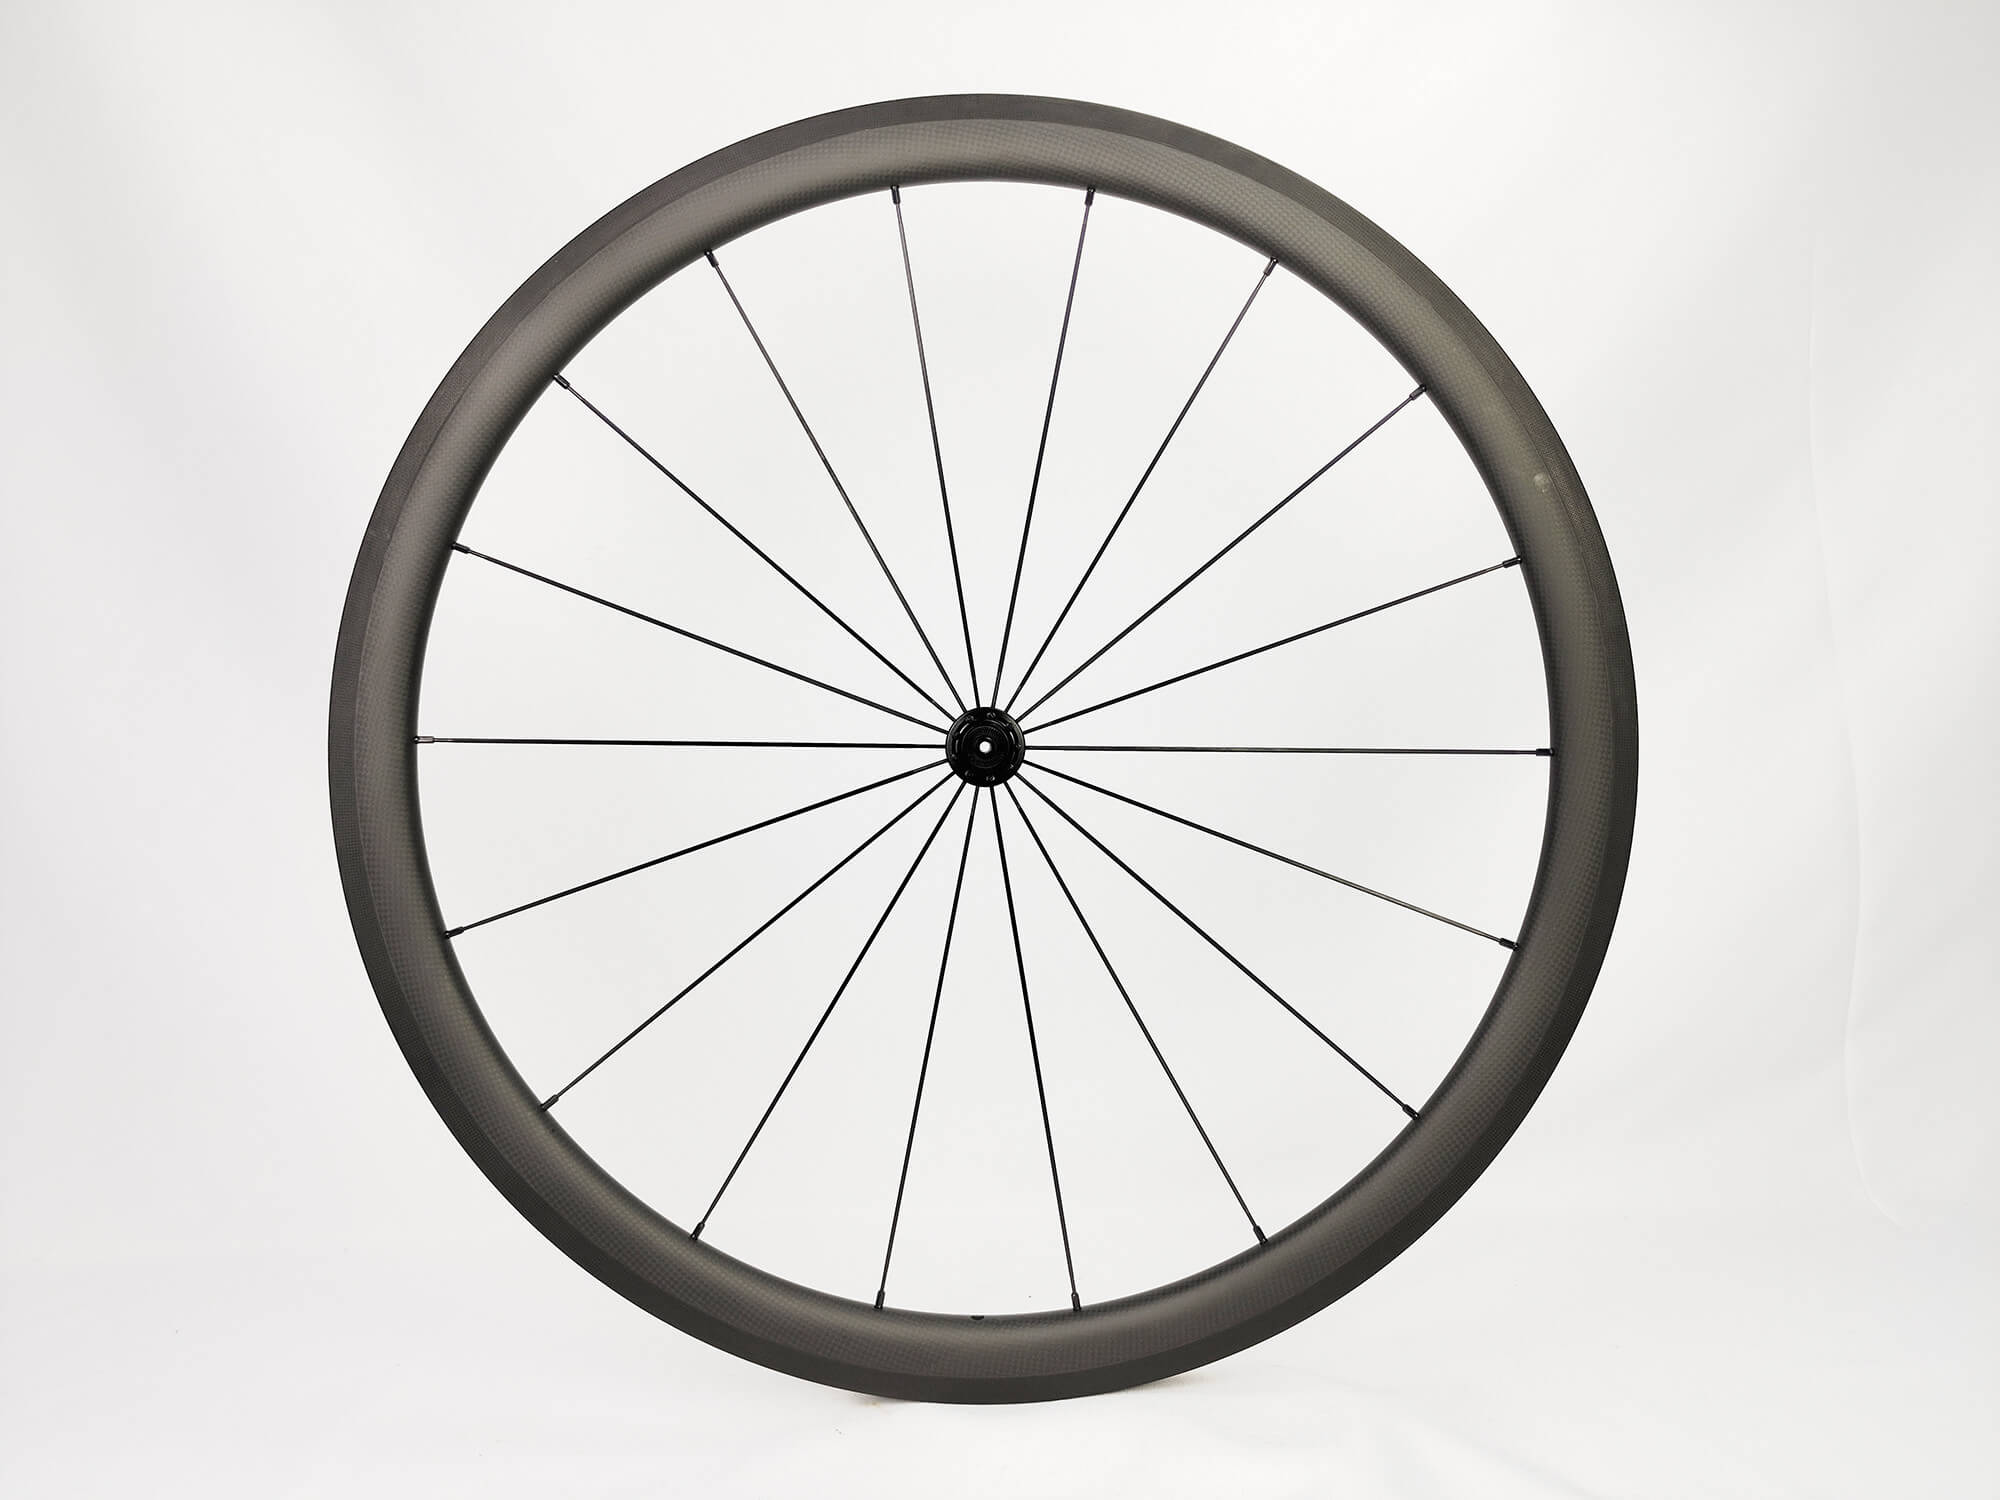 38mm tubular carbon road bicycle wheelset G3 01.jpg